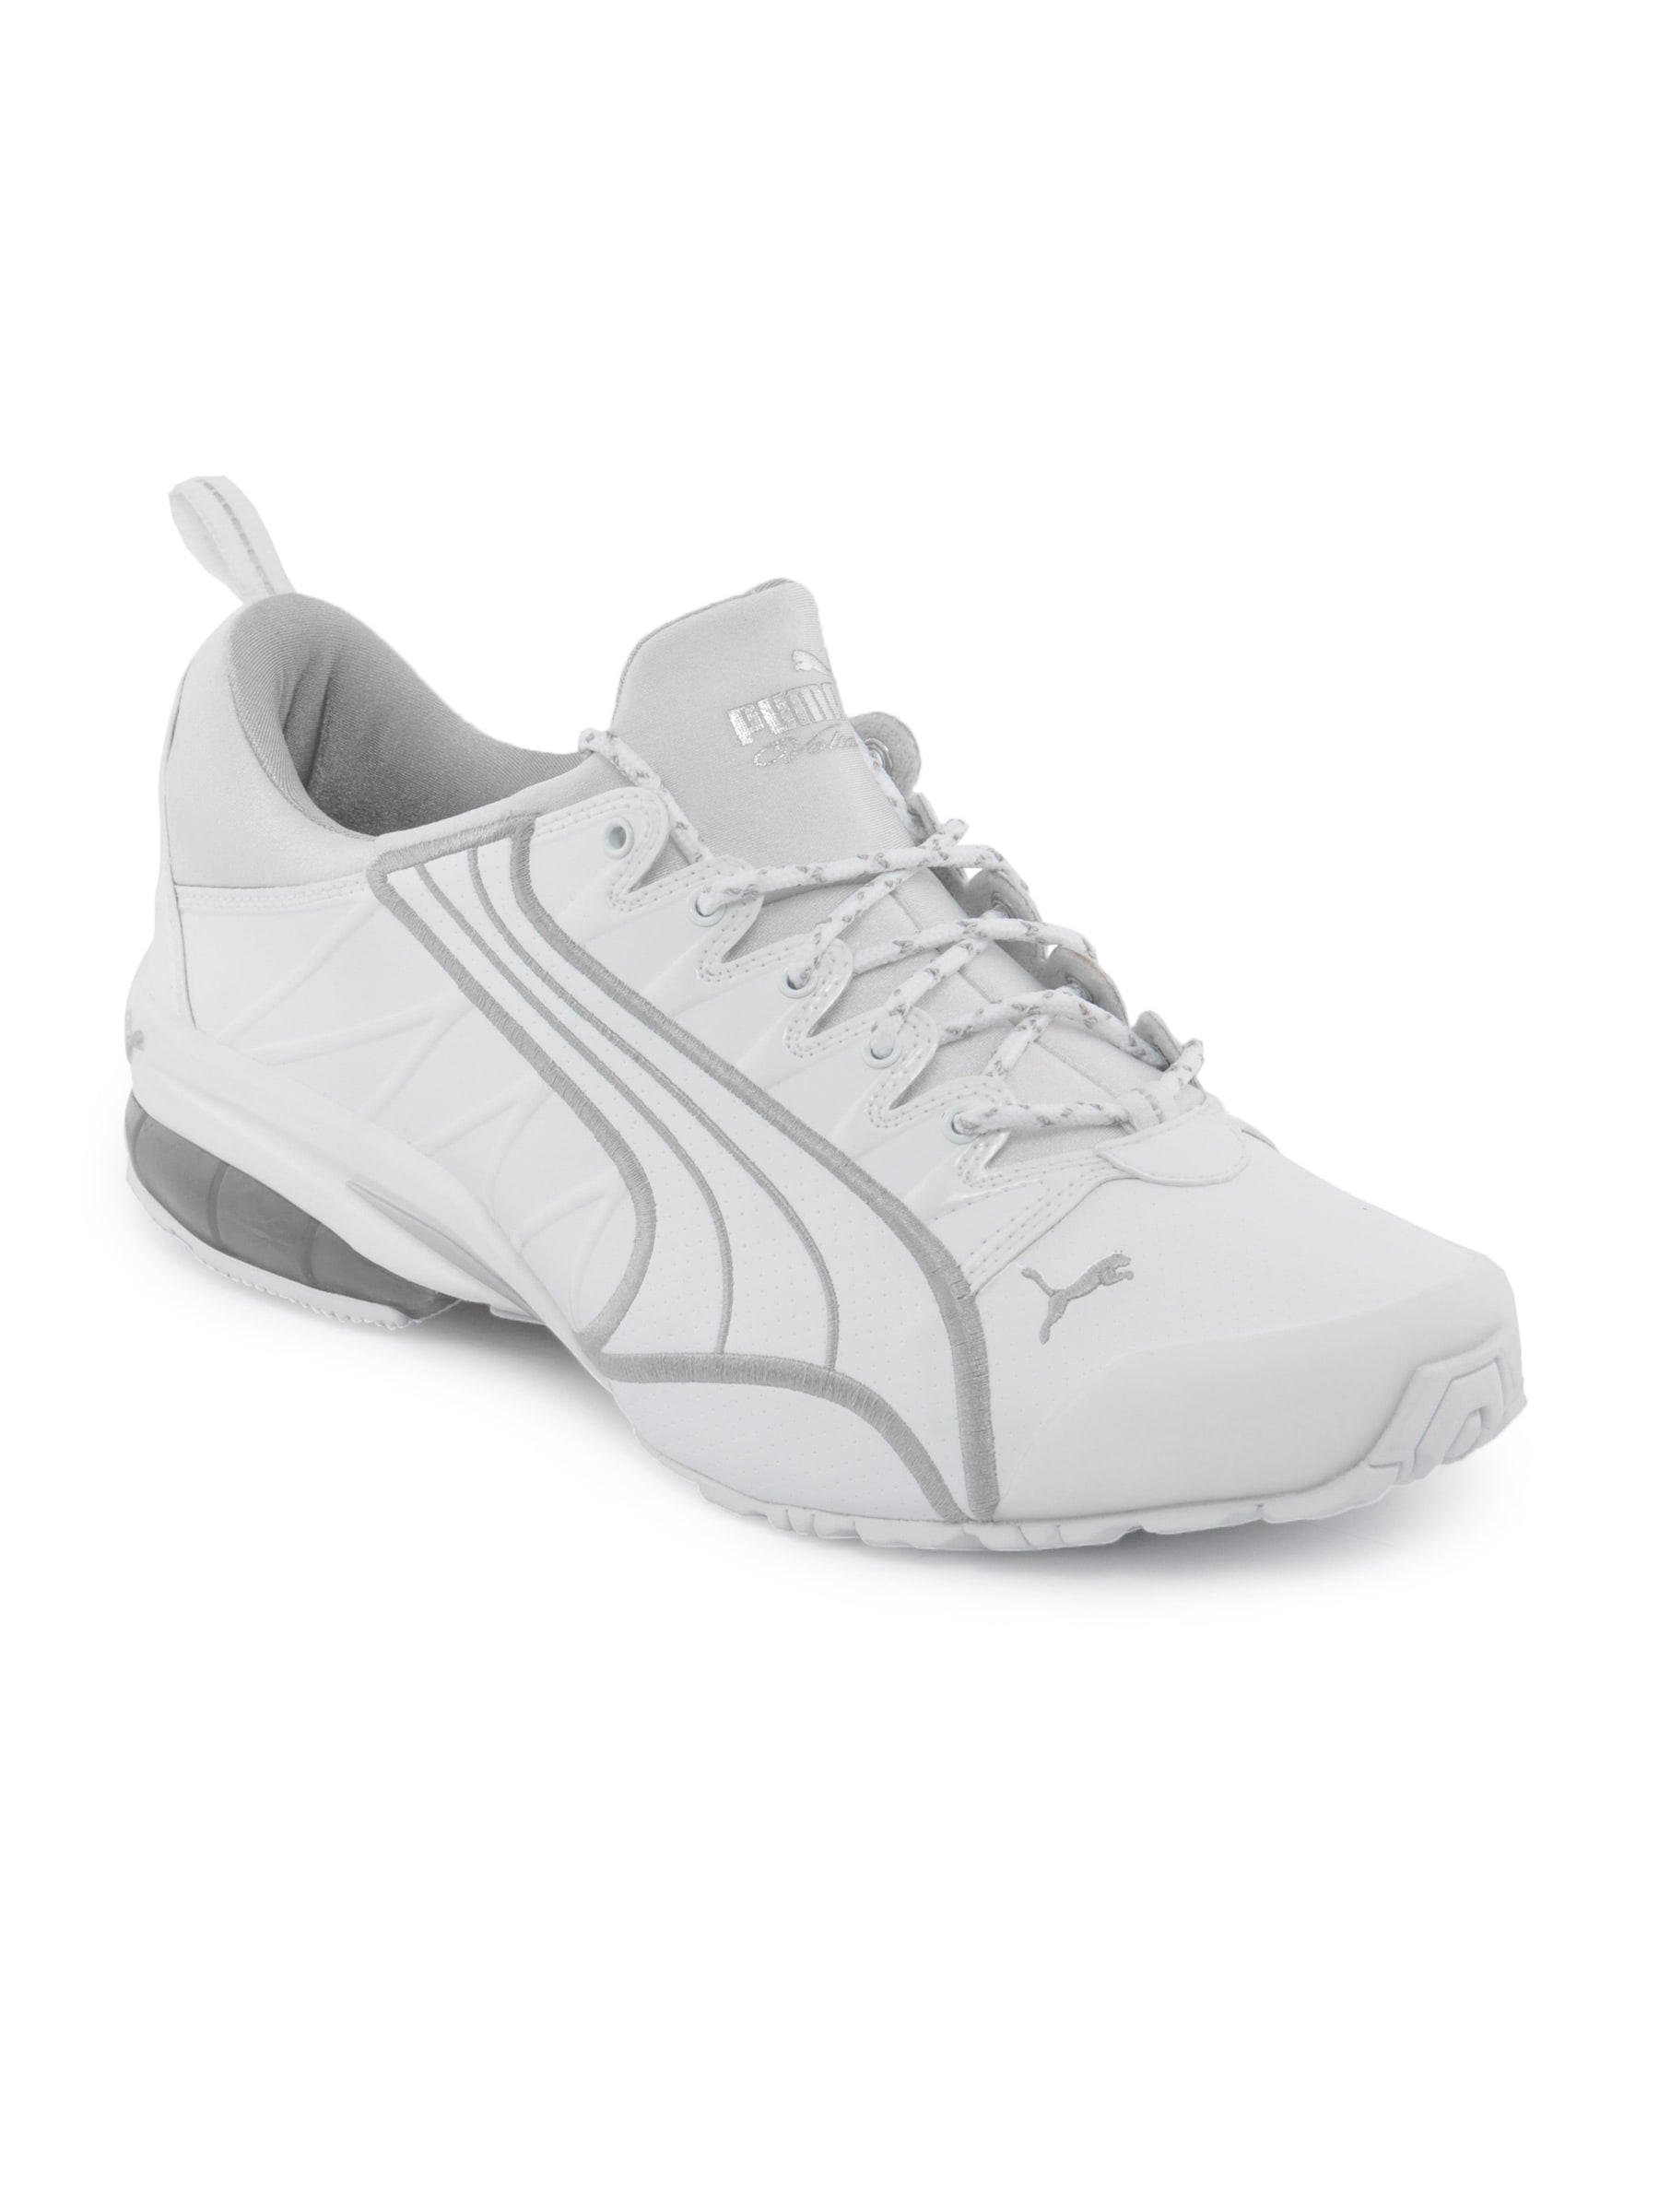 Puma Men Voltaic WP White Sports Shoe